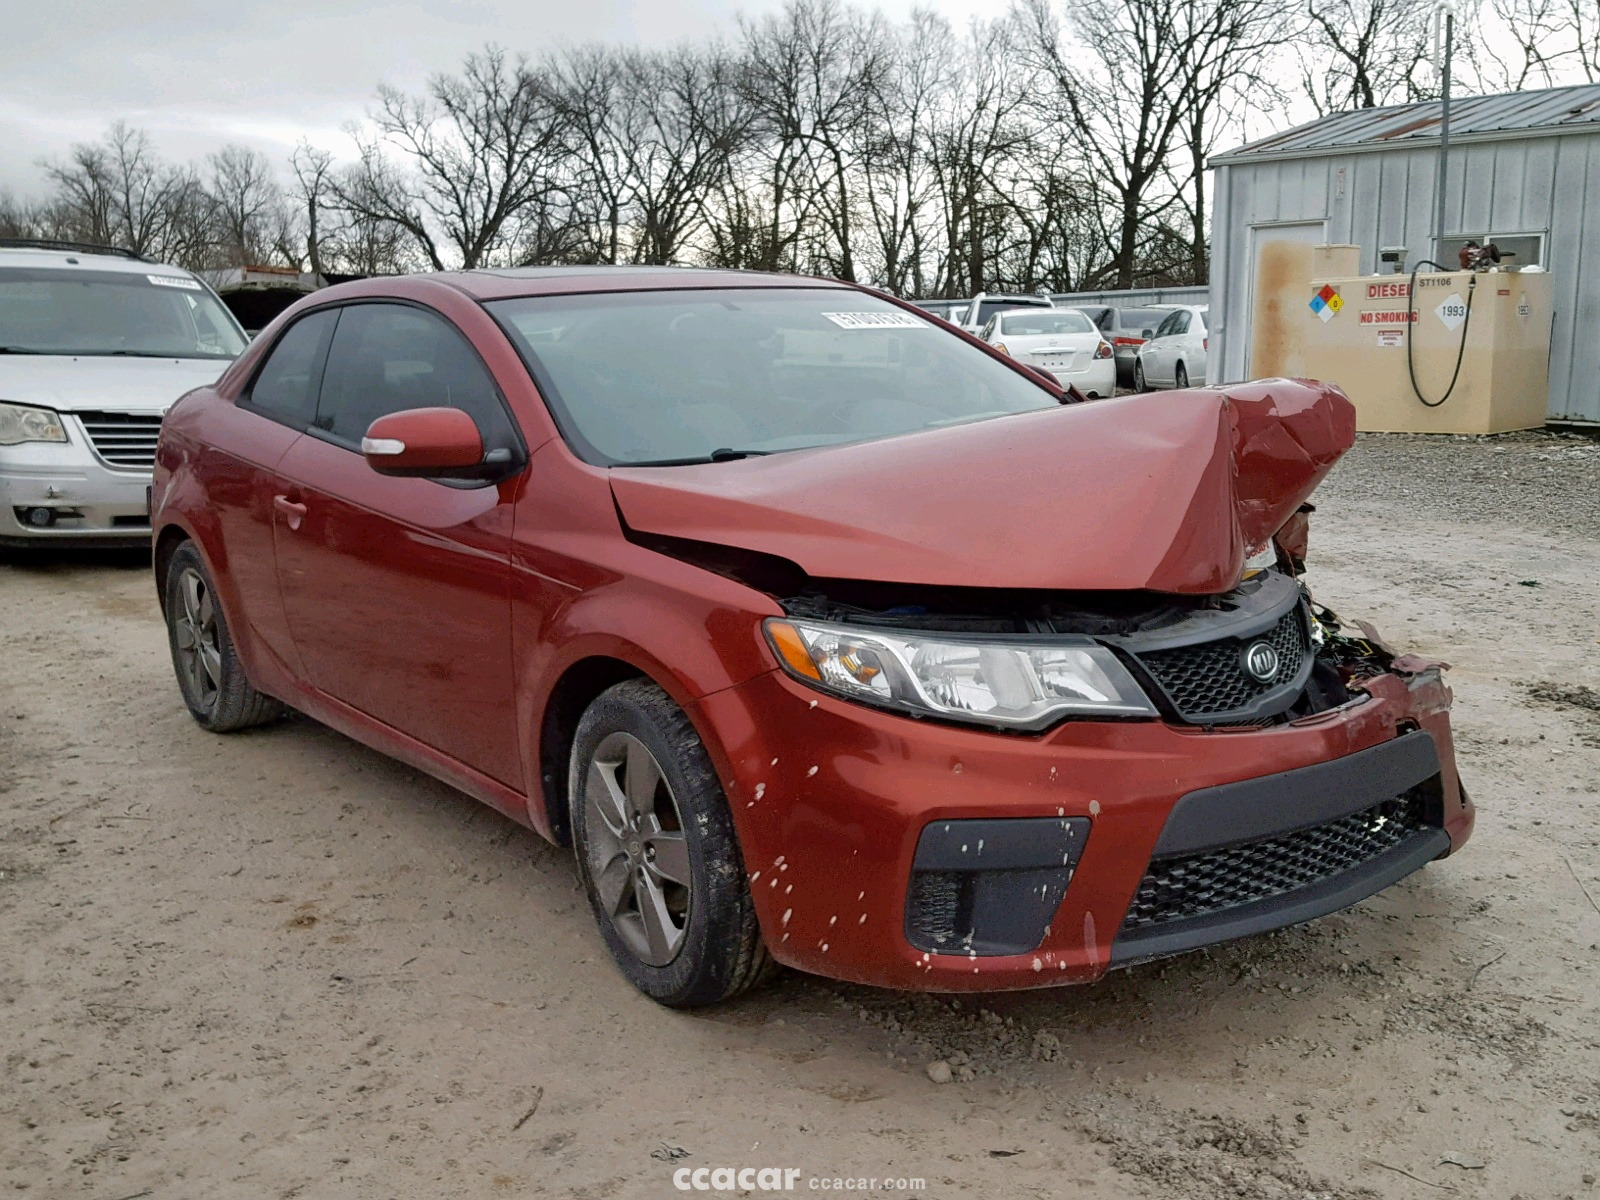 2010 Kia Forte Koup EX | Salvage & Damaged Cars for Sale